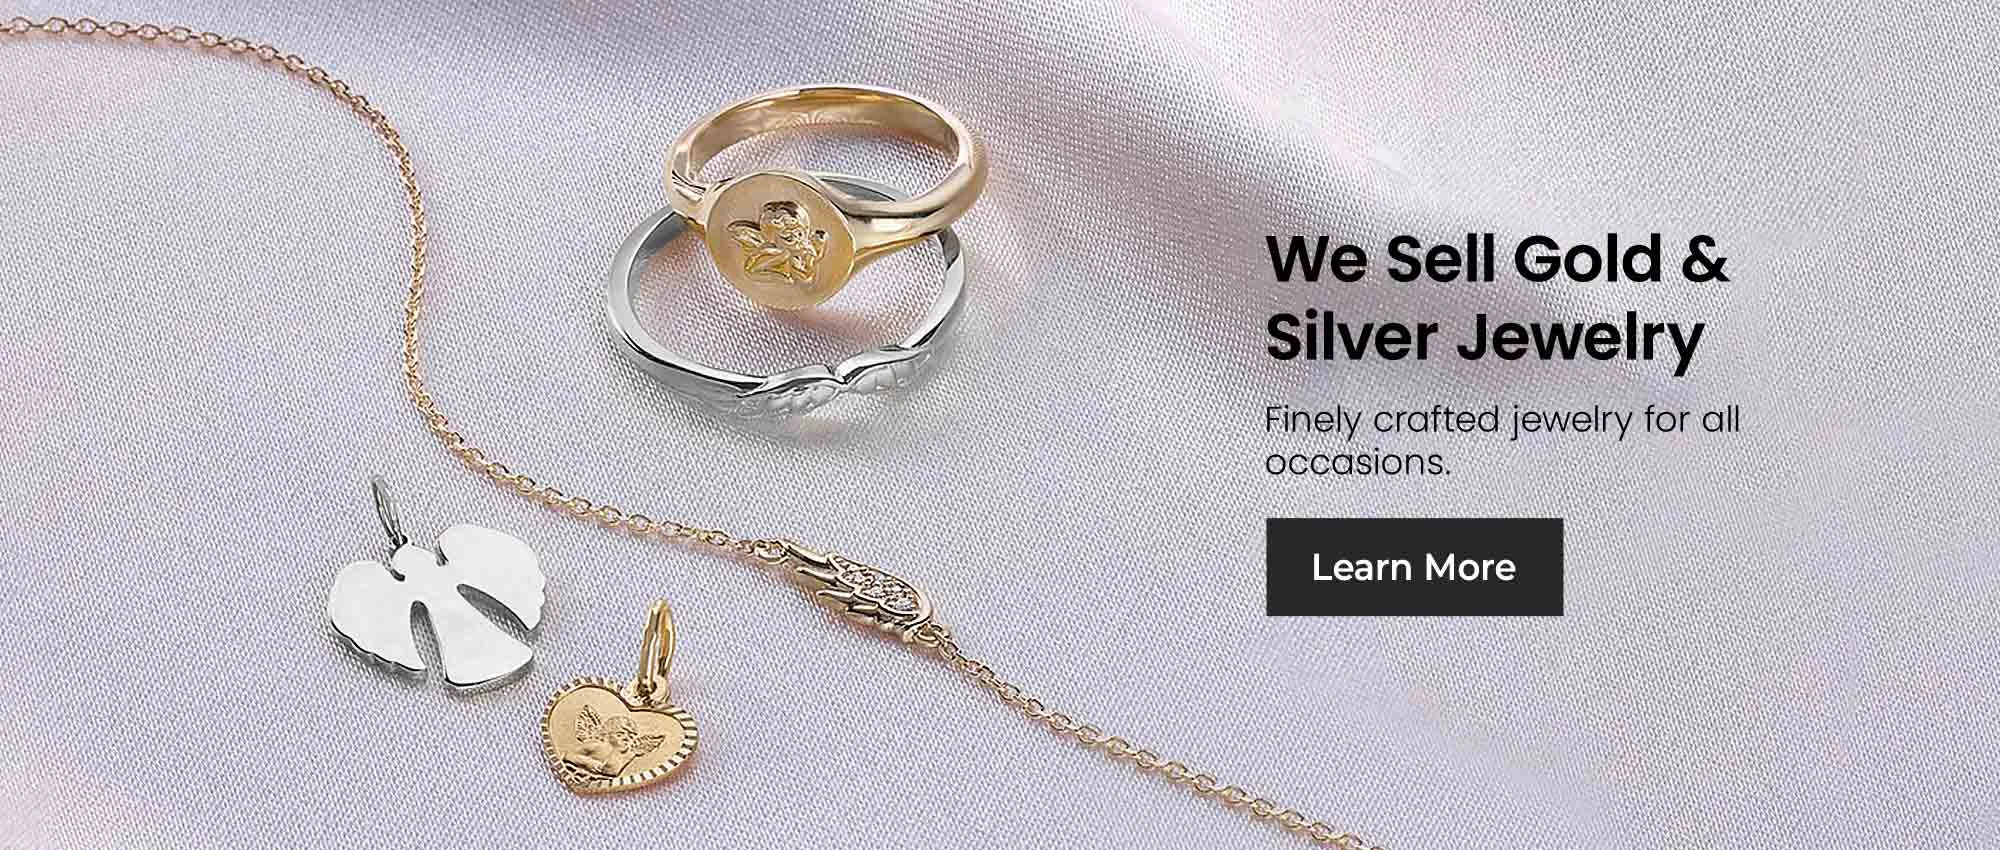 Borthwick Jewelry Sell Gold and Silver Jewelry